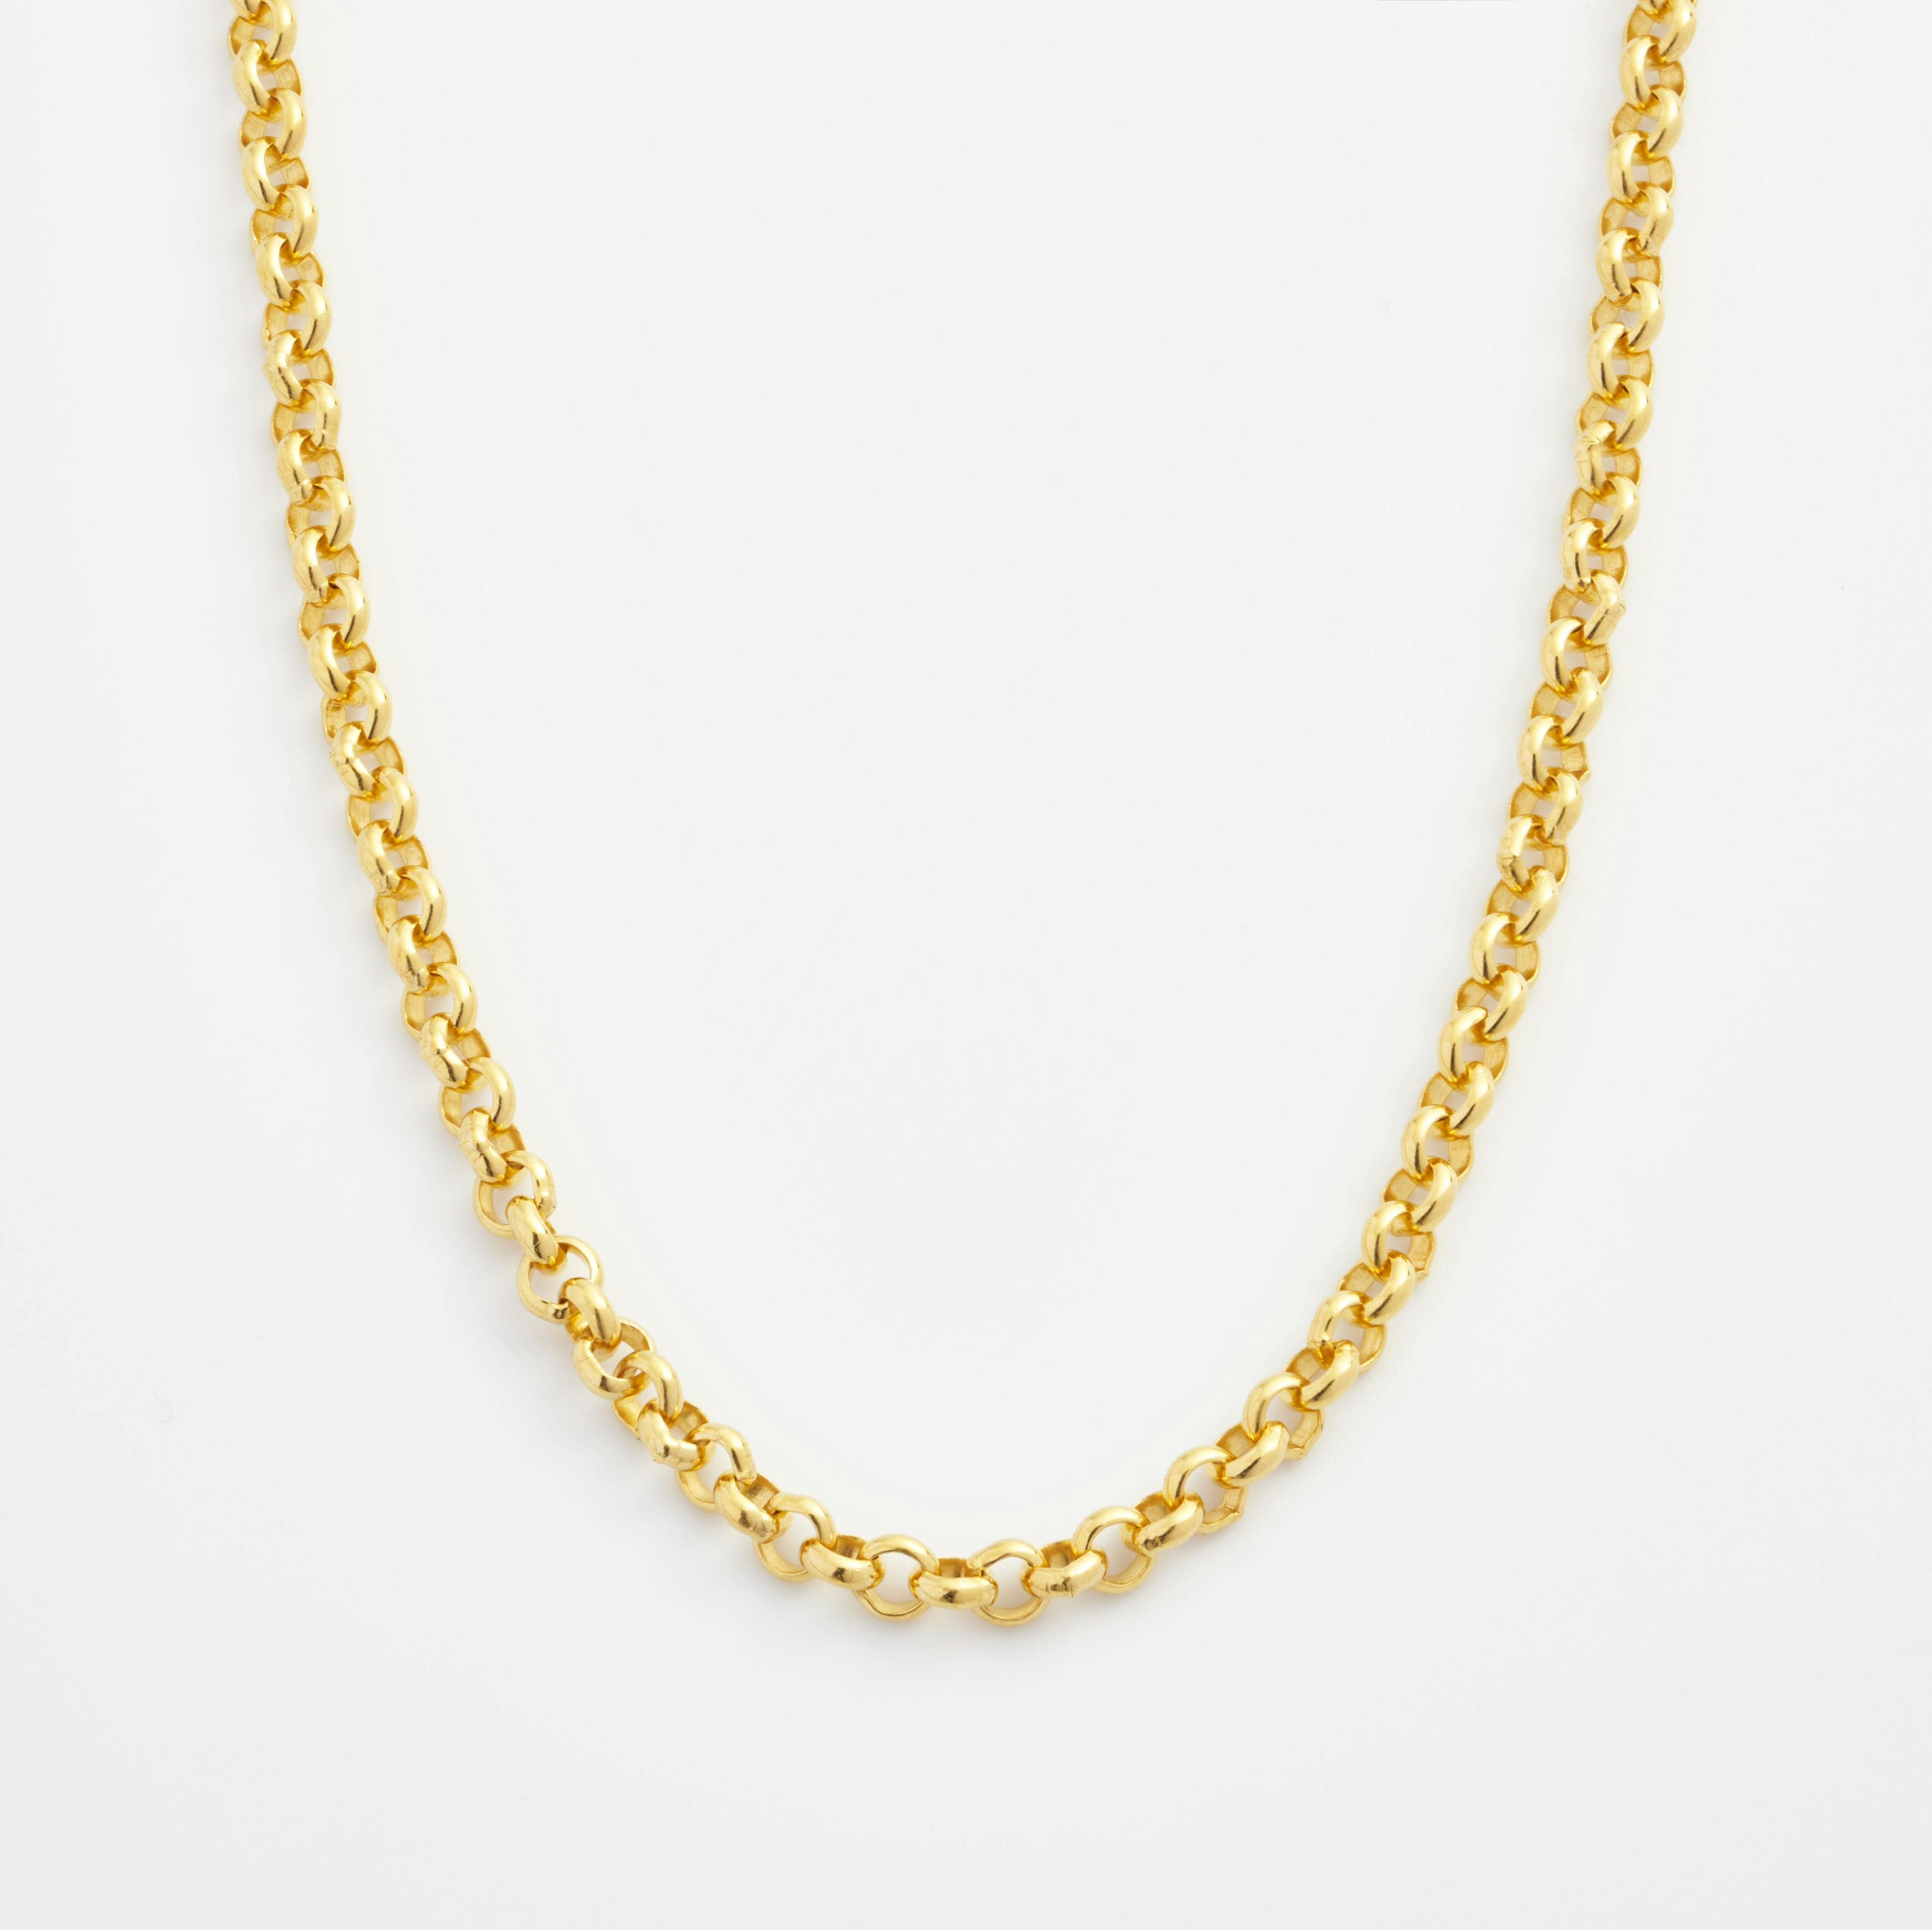 Shop Gold Necklace Chains Rolo Chain Necklace